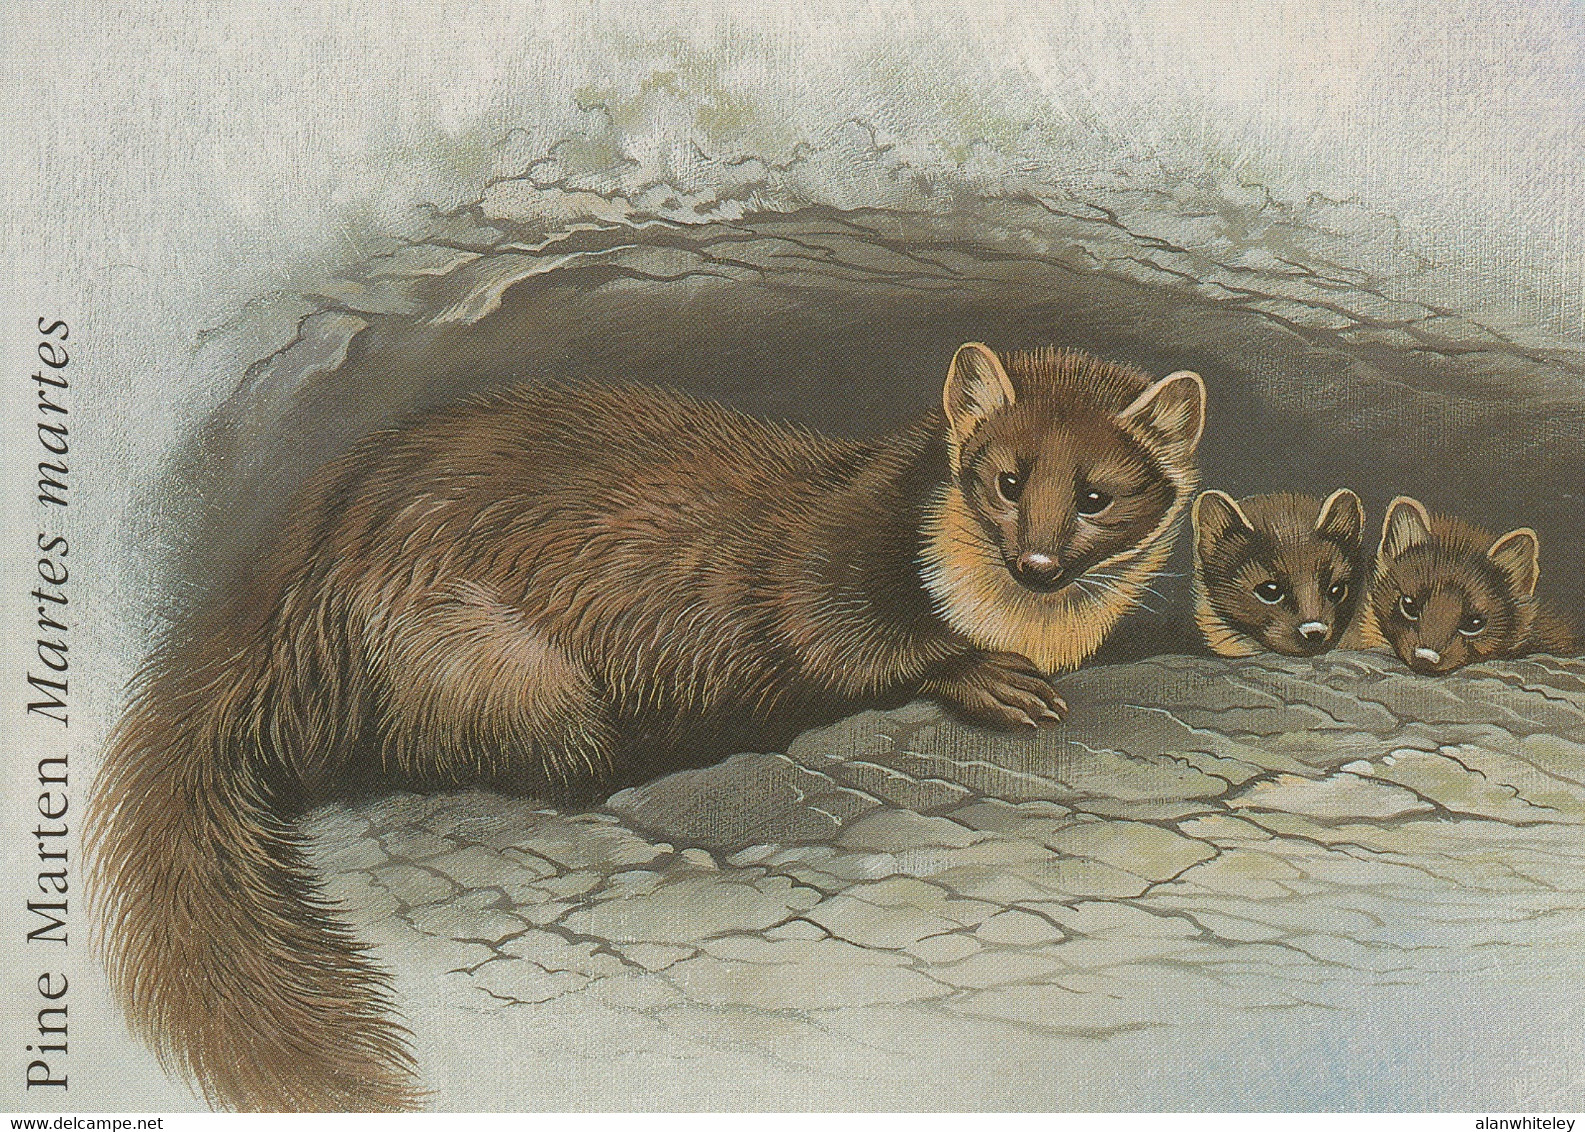 IRELAND 1992 Endangered Species / Pine Martin: Set Of 4 Postcards MINT/UNUSED - Entiers Postaux